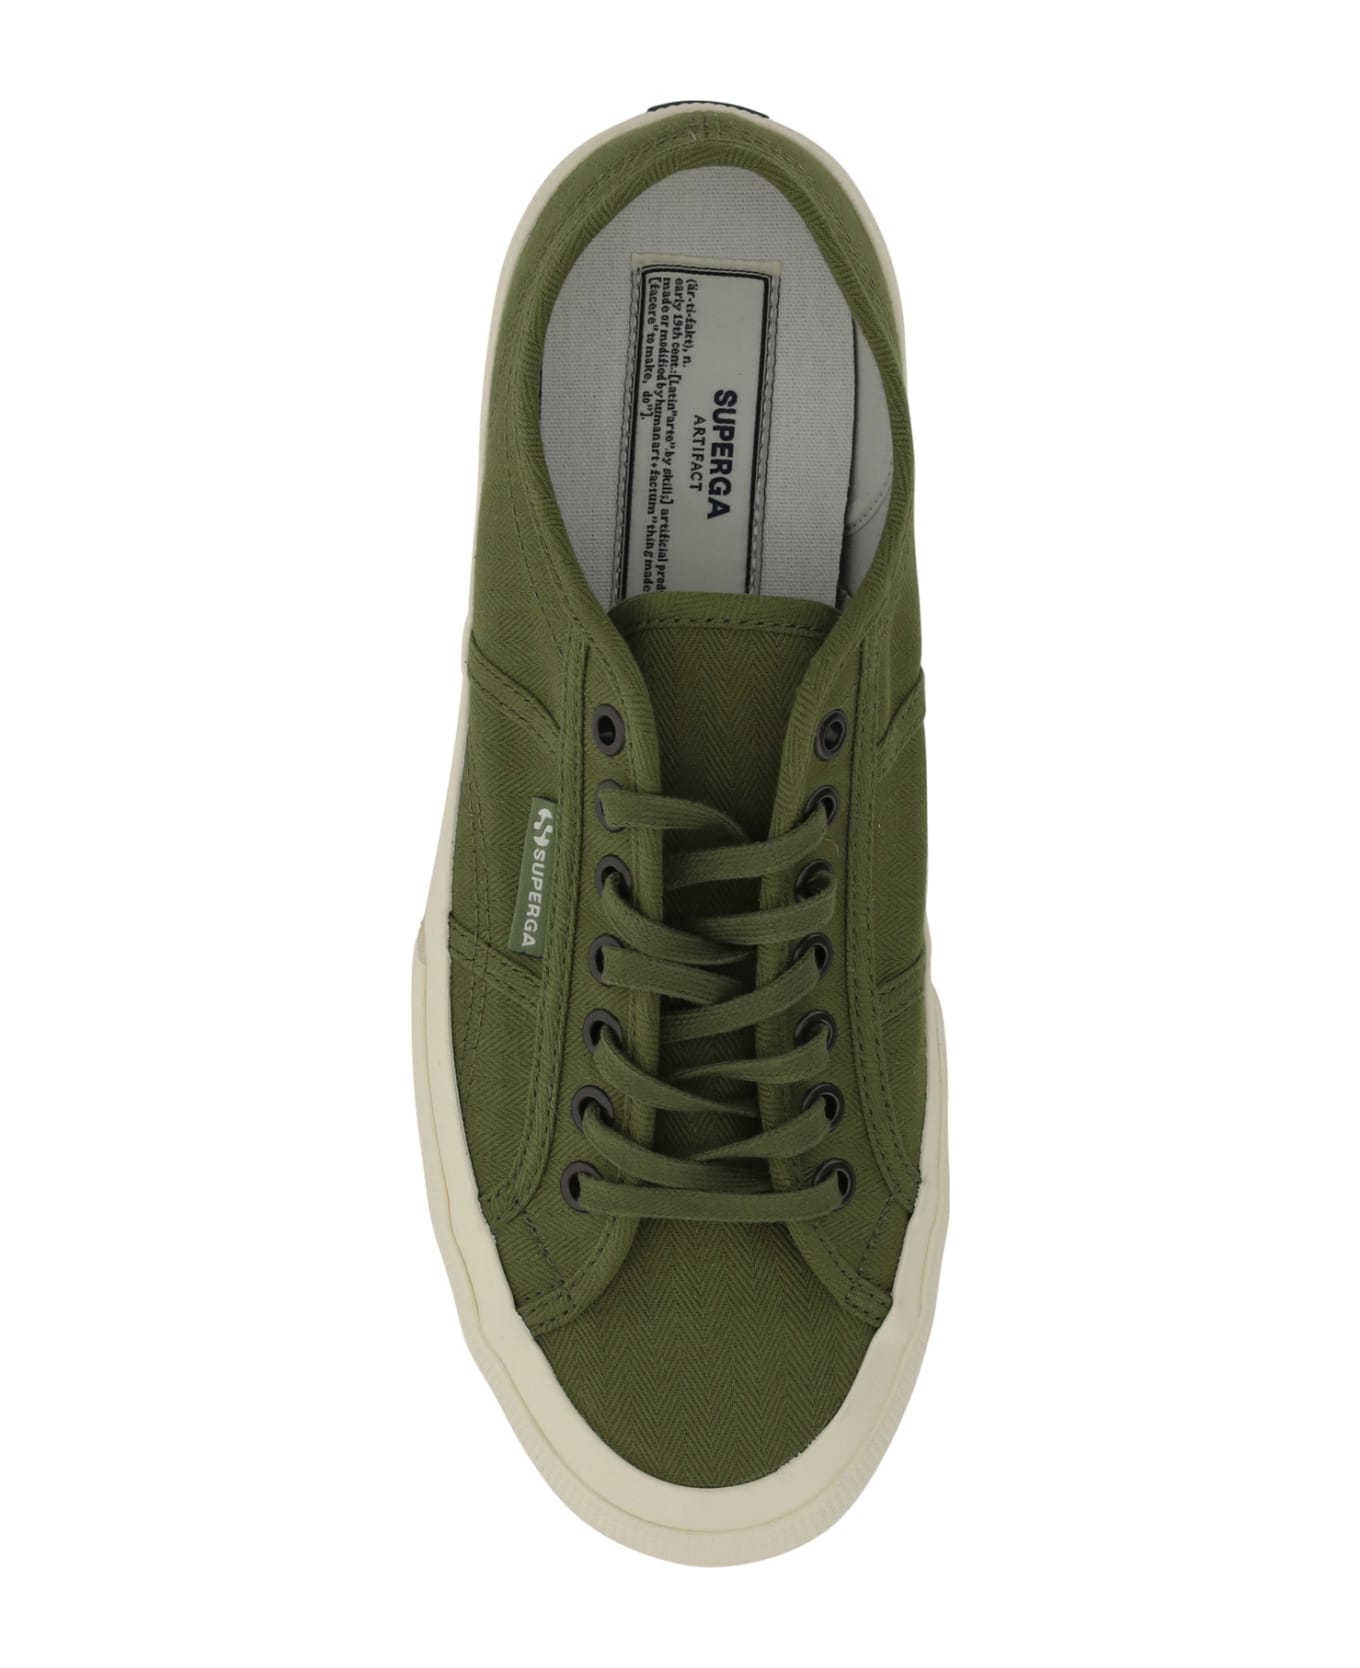 Superga Artifact Herringbone Sneakers - Green-off White